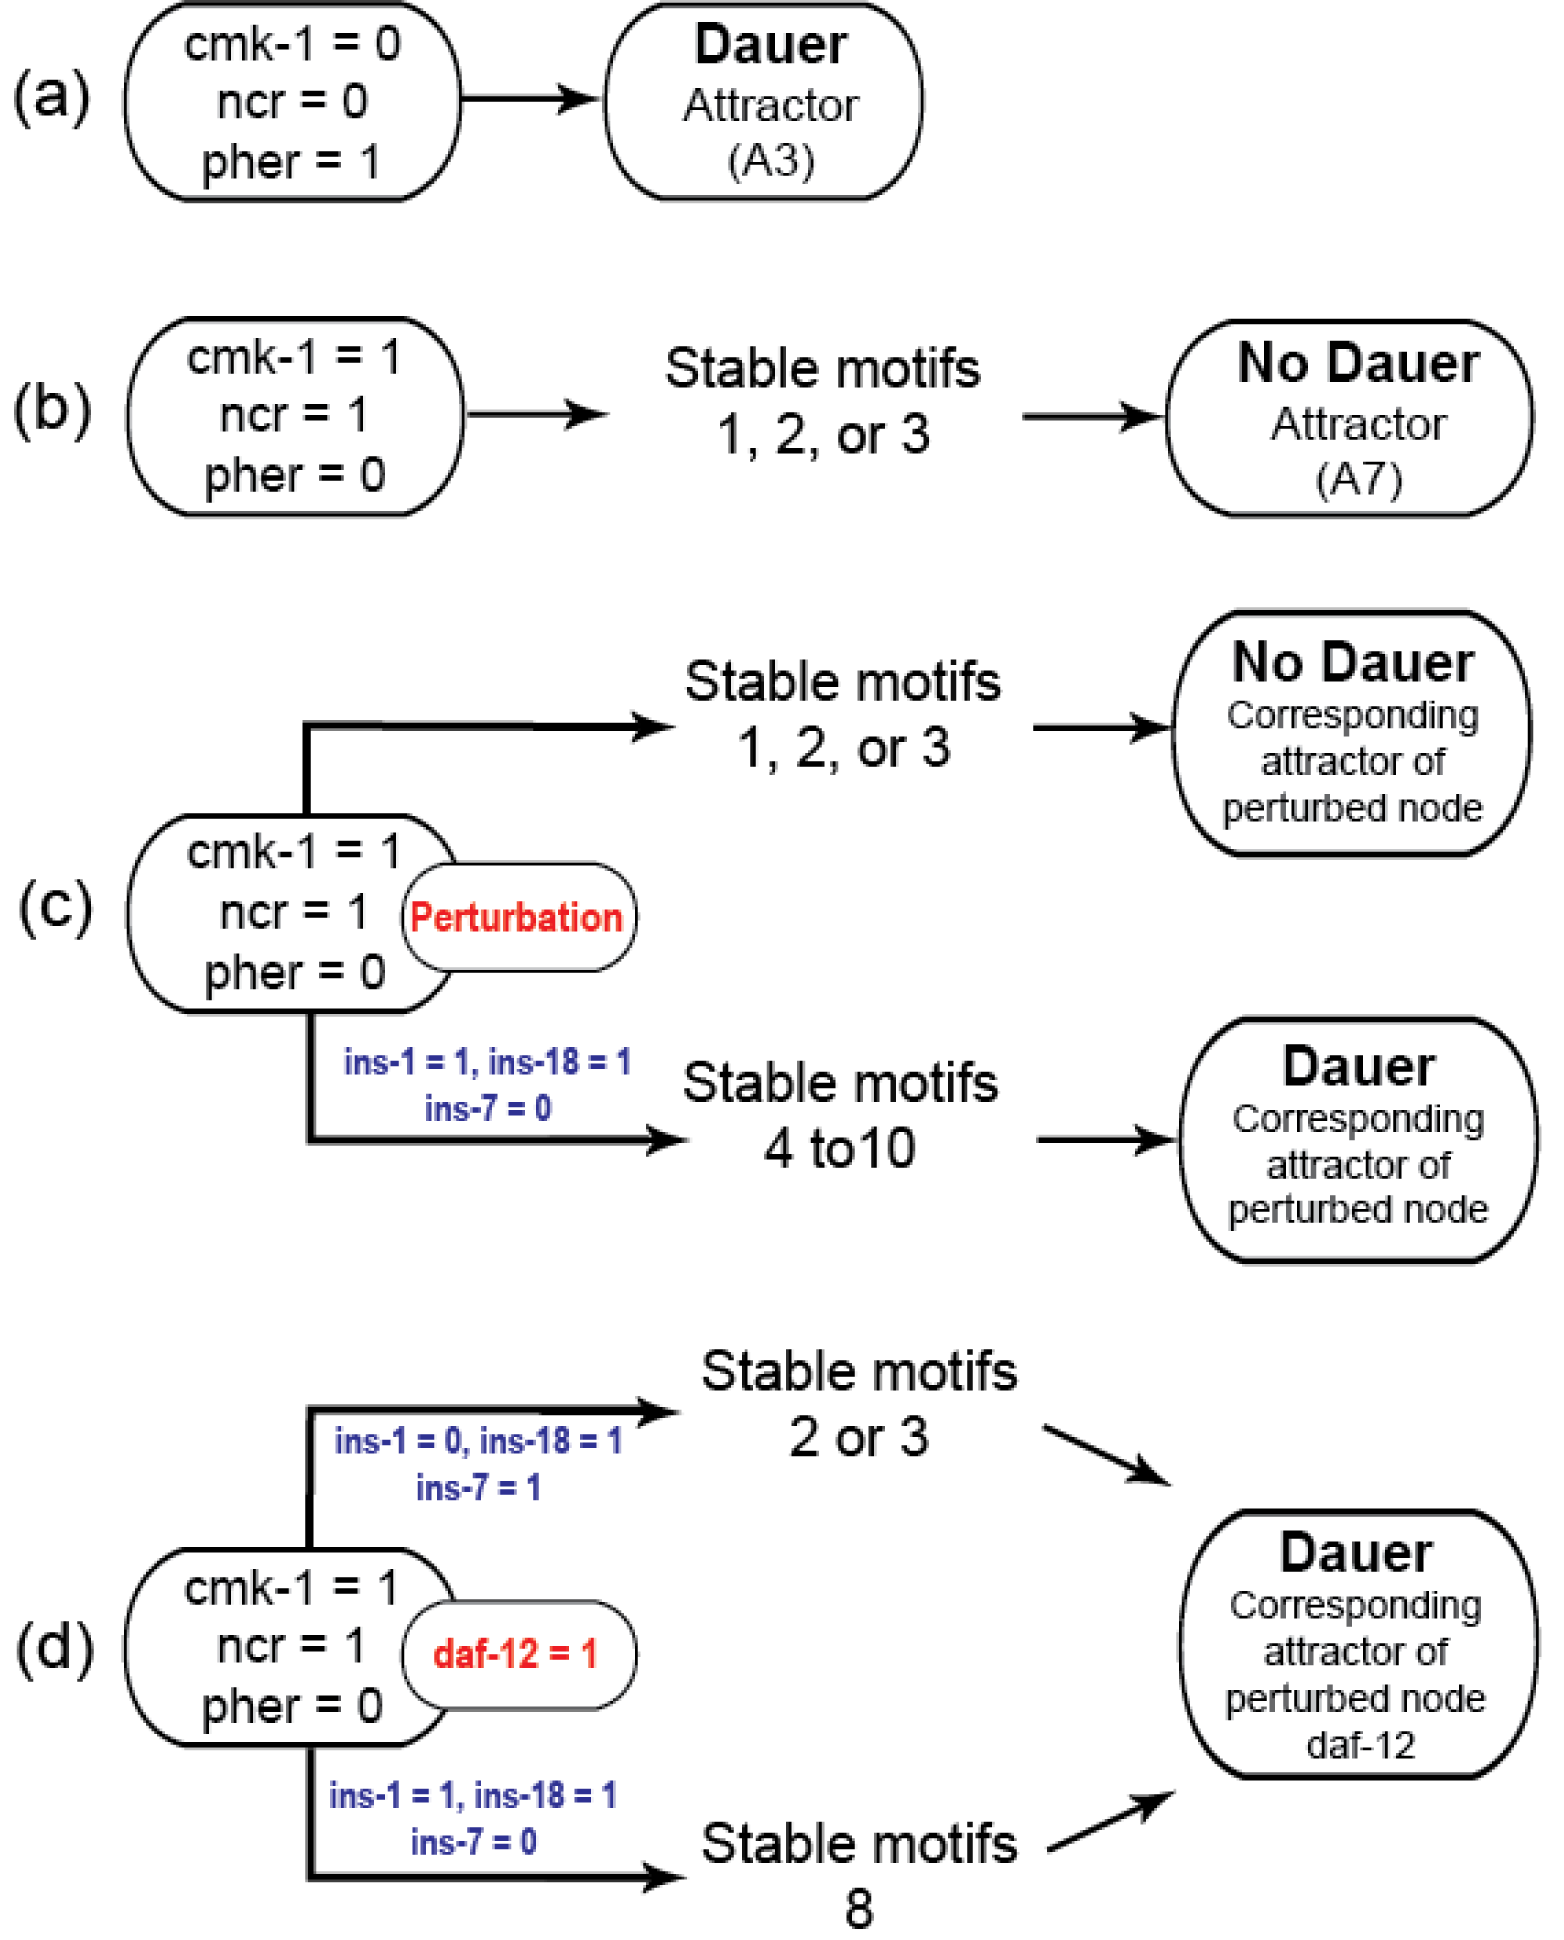 Dauer fate in a Caenorhabditis elegans Boolean network model [PeerJ]